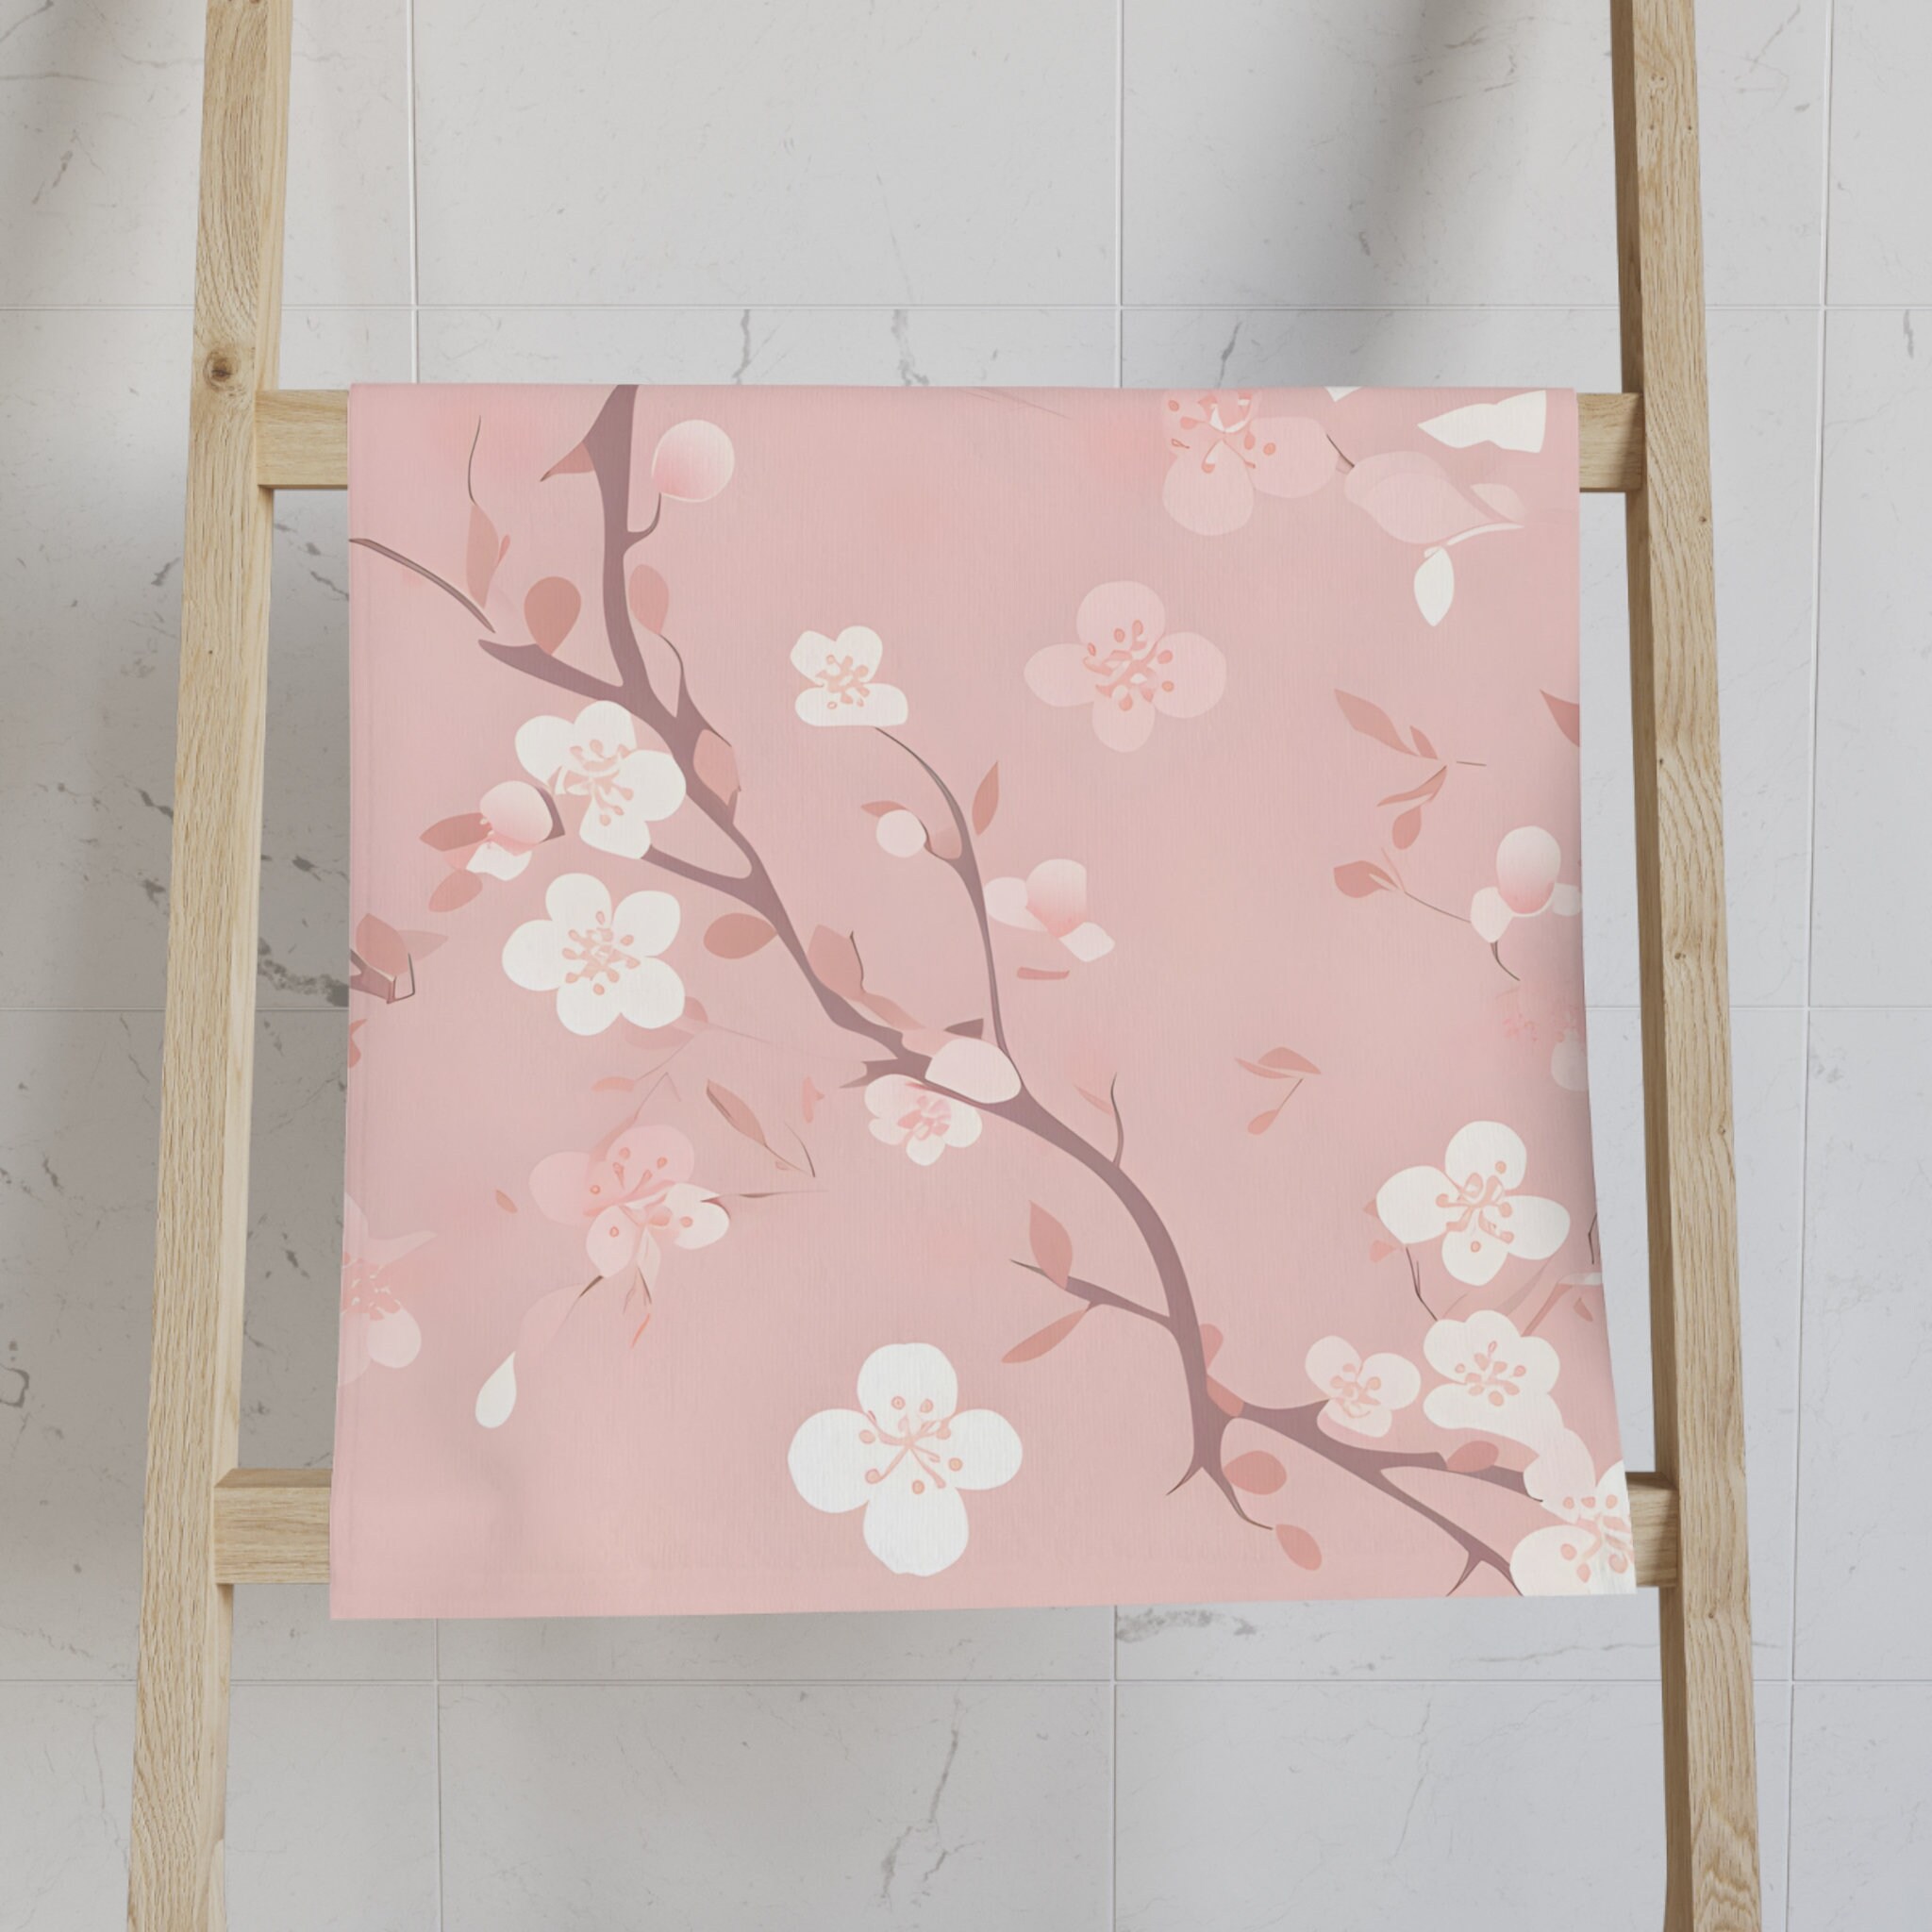 Imabari Towel Brand Certified Cherry Blossom Cloth Soft Gauze & Pile Fabric  Pink Bath Towel, Hand To…See more Imabari Towel Brand Certified Cherry